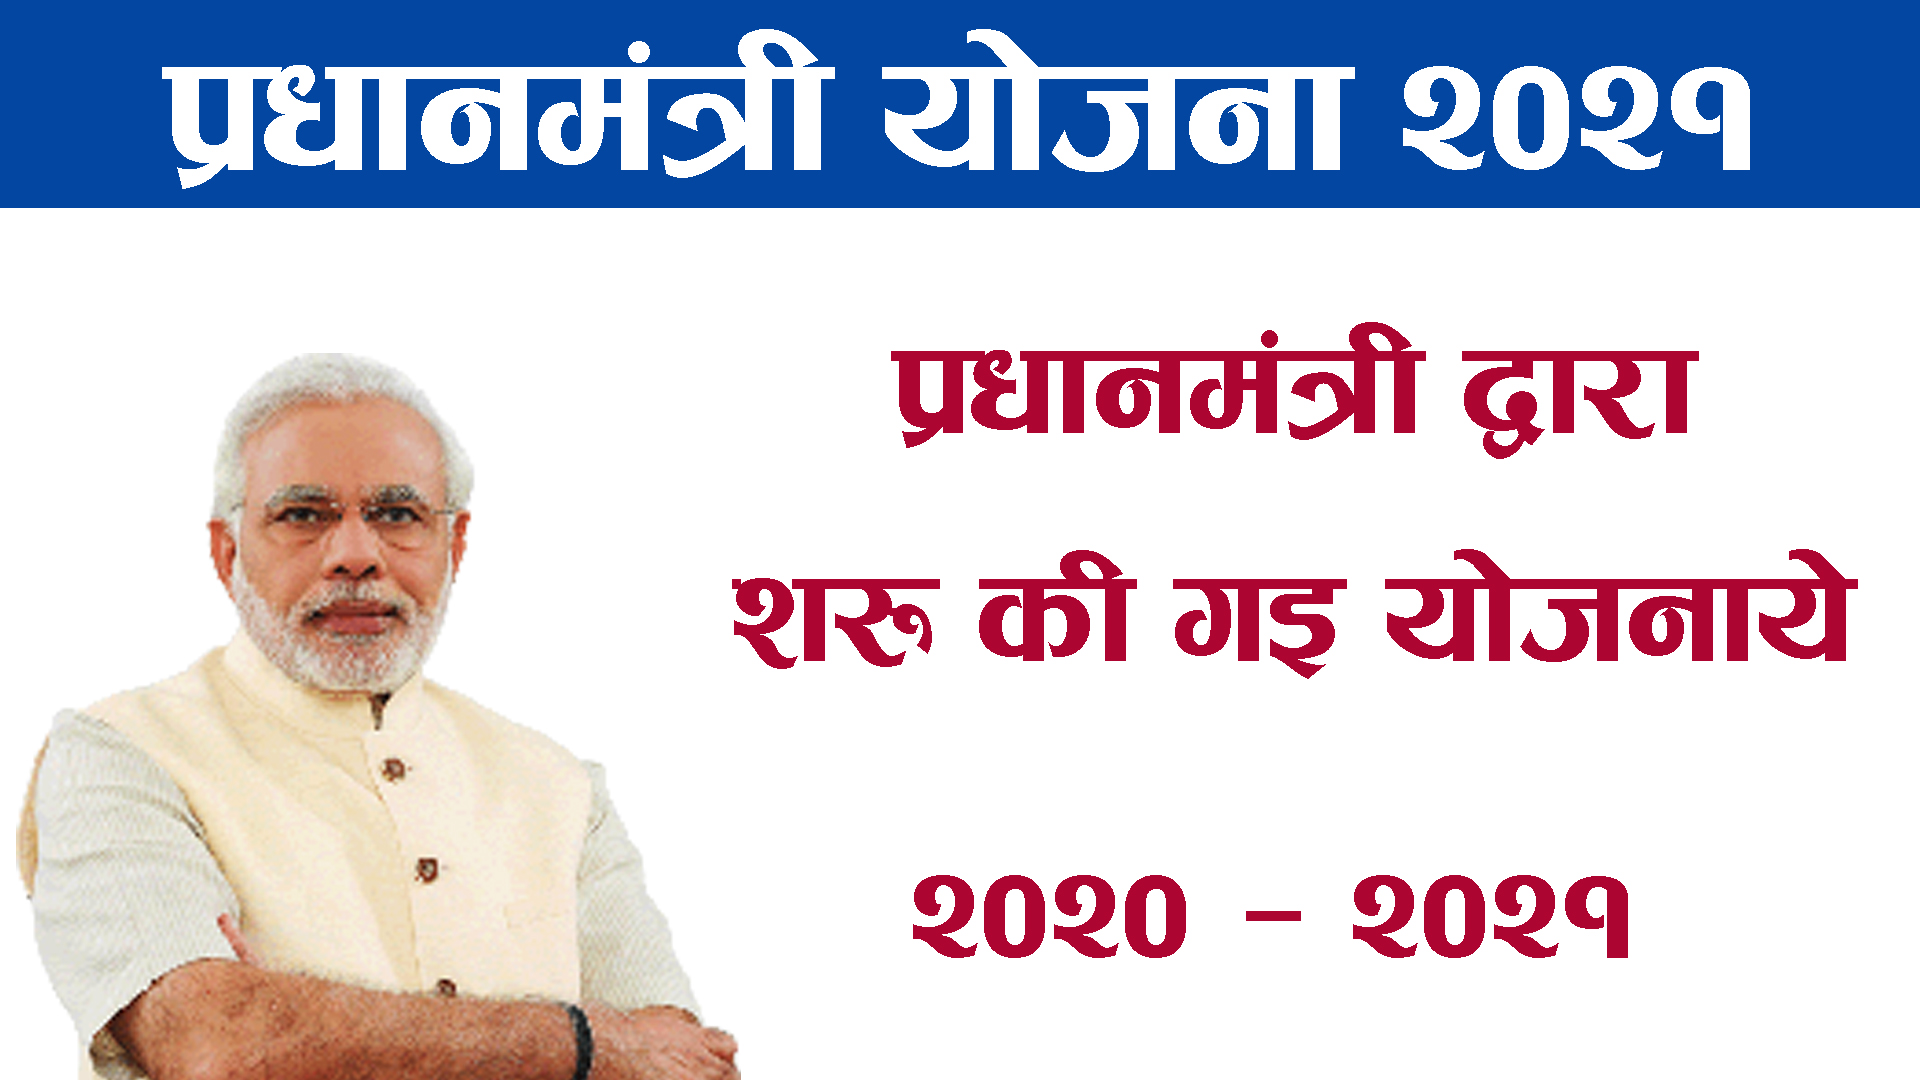 Pradhan Mantri Yojana 2021 : प्रधानमंत्री नरेन्द्र मोदी योजना सूचि | सरकारी योजना लिस्ट